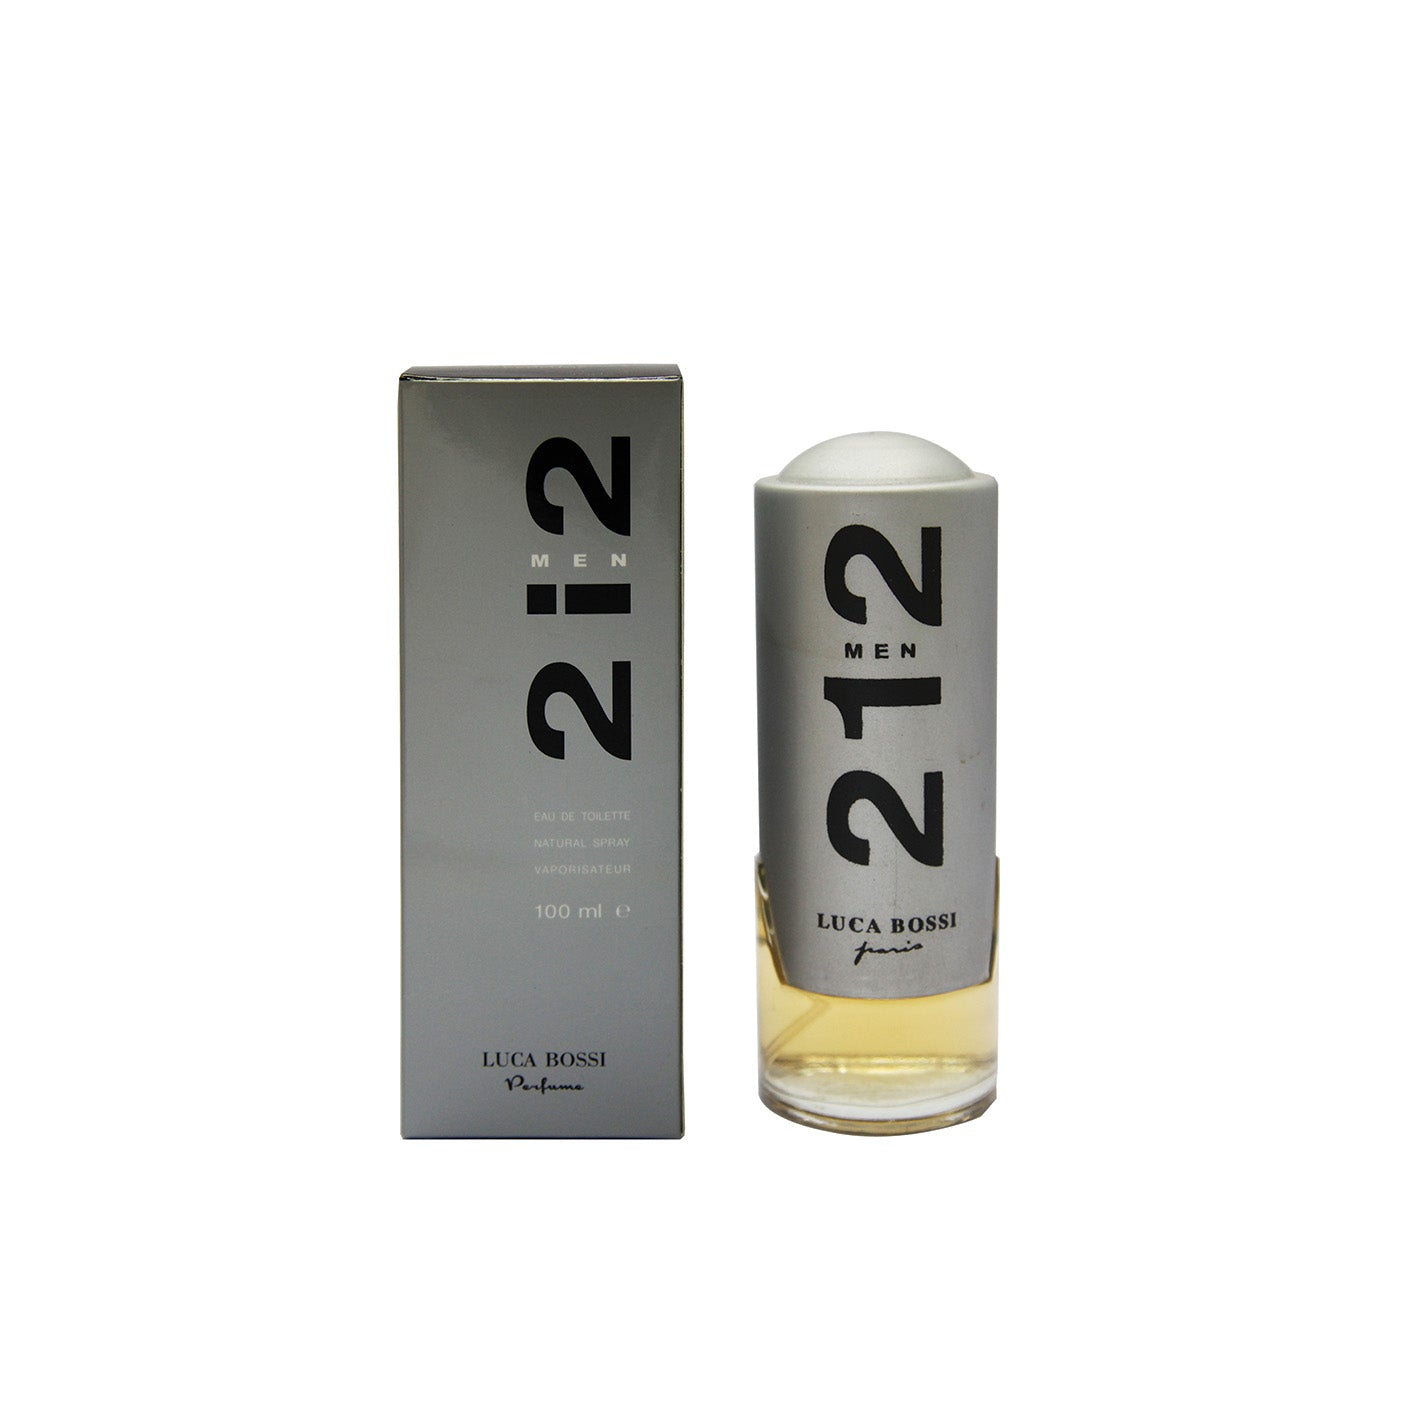 Perfume (212 MEN) 100ml D66-1